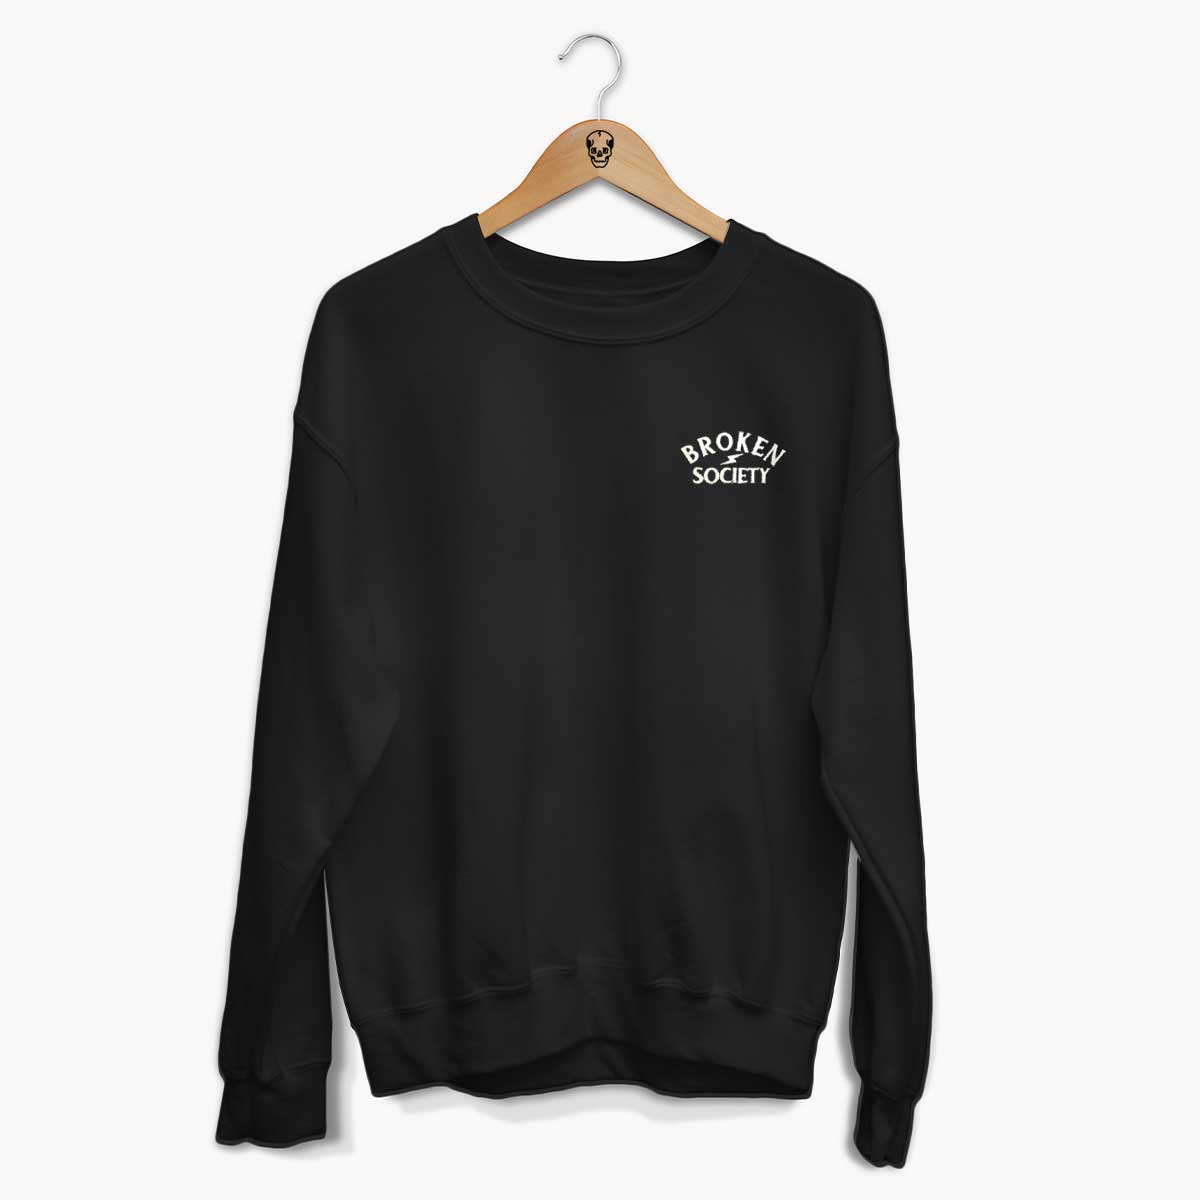 Broken Society Embroidered Sweatshirt (Unisex) product